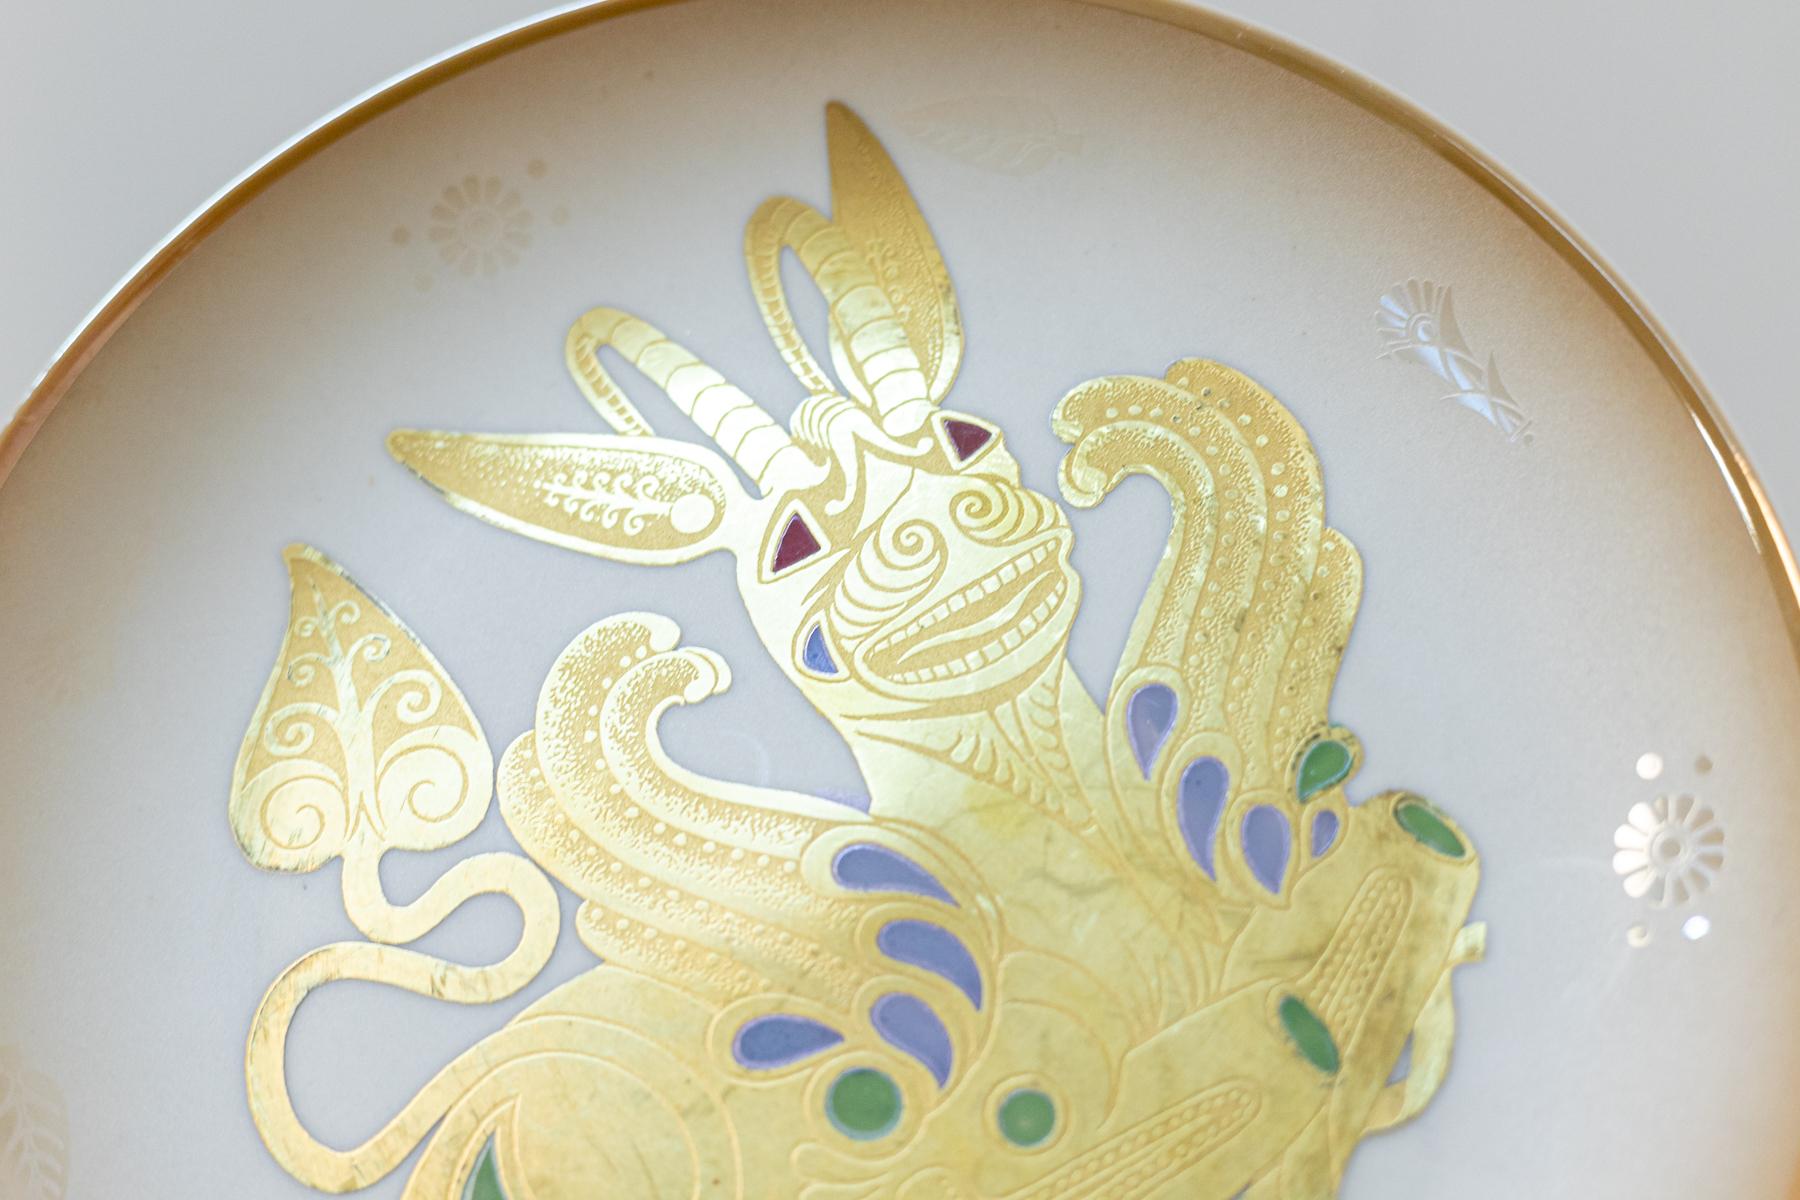 Arte Morbelli Five Porcelain Plates with 24k Golden Inserts For Sale 2